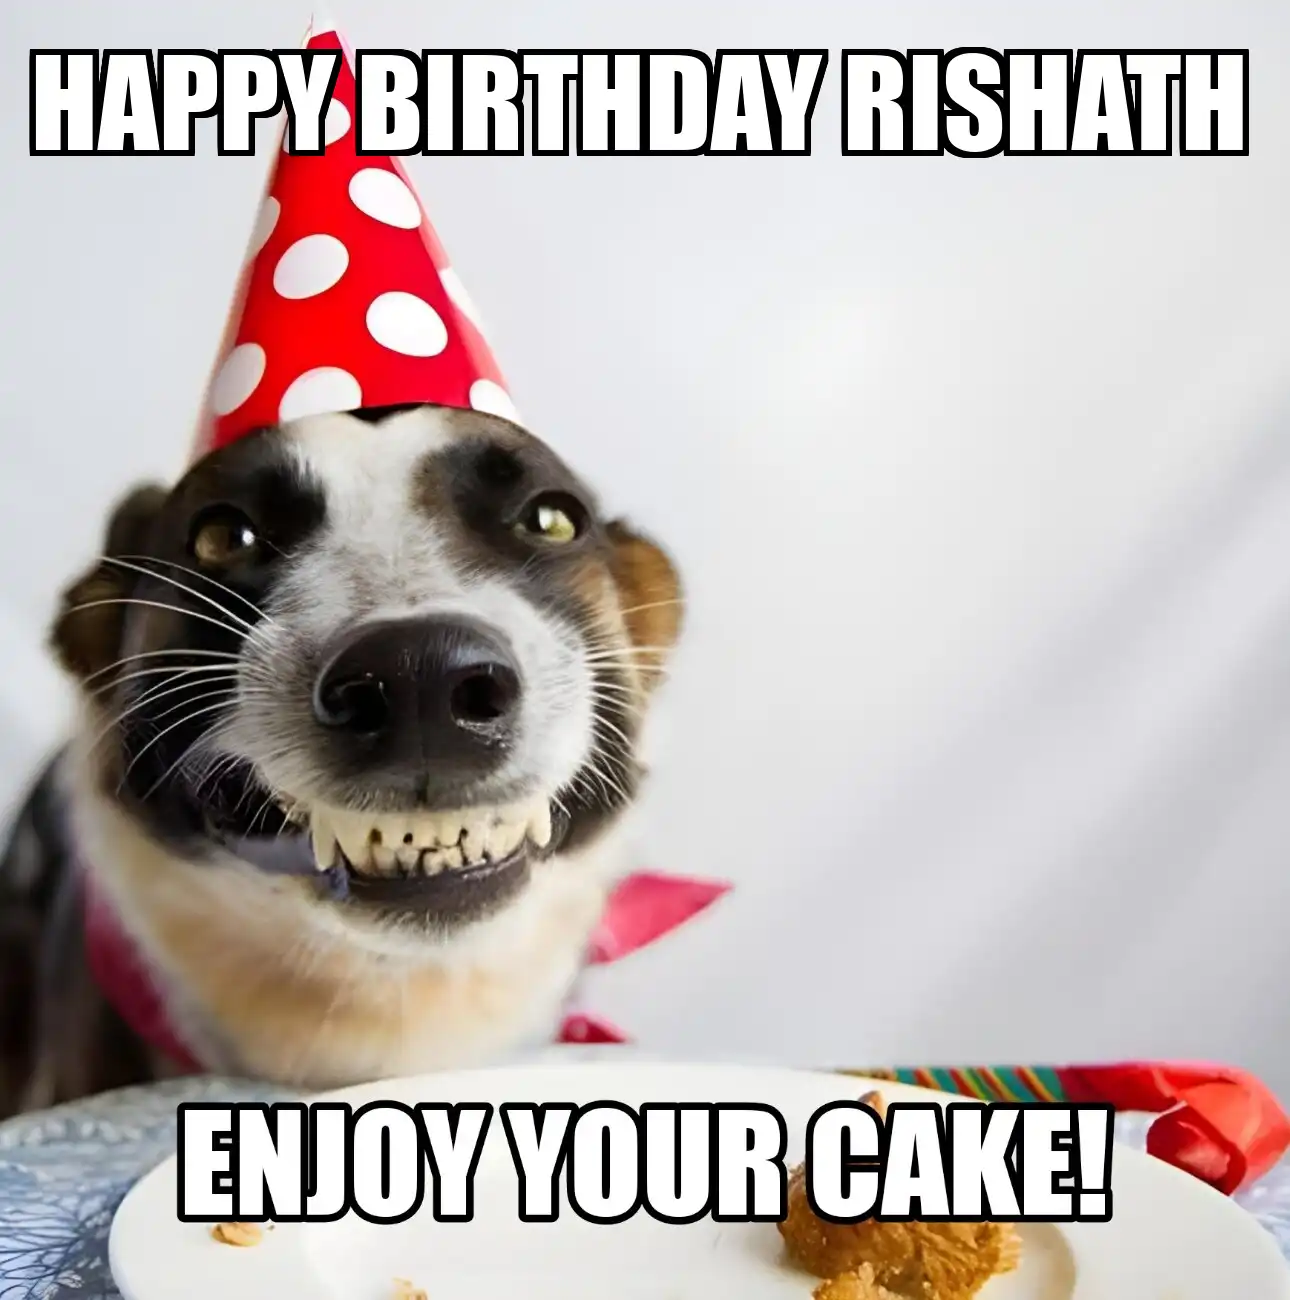 Happy Birthday Rishath Enjoy Your Cake Dog Meme